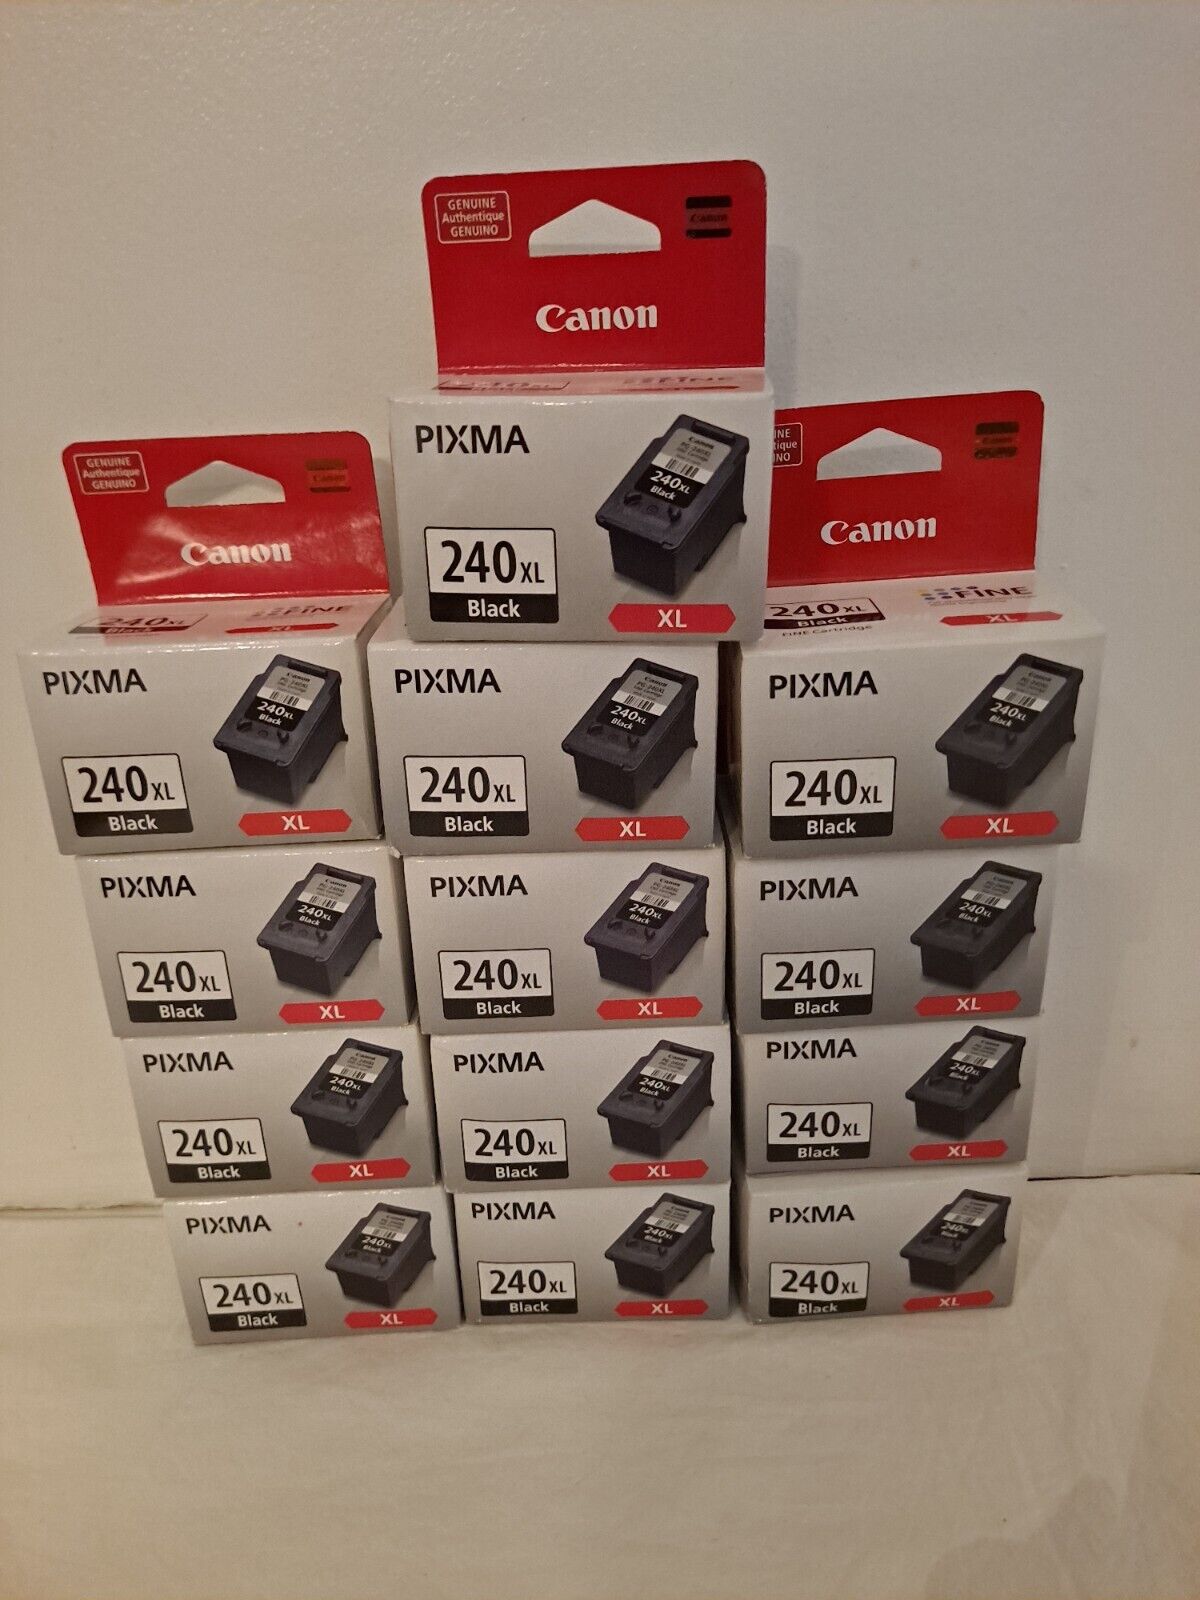 PIXMA Canon 240XL FINE Black Cartridges NEW